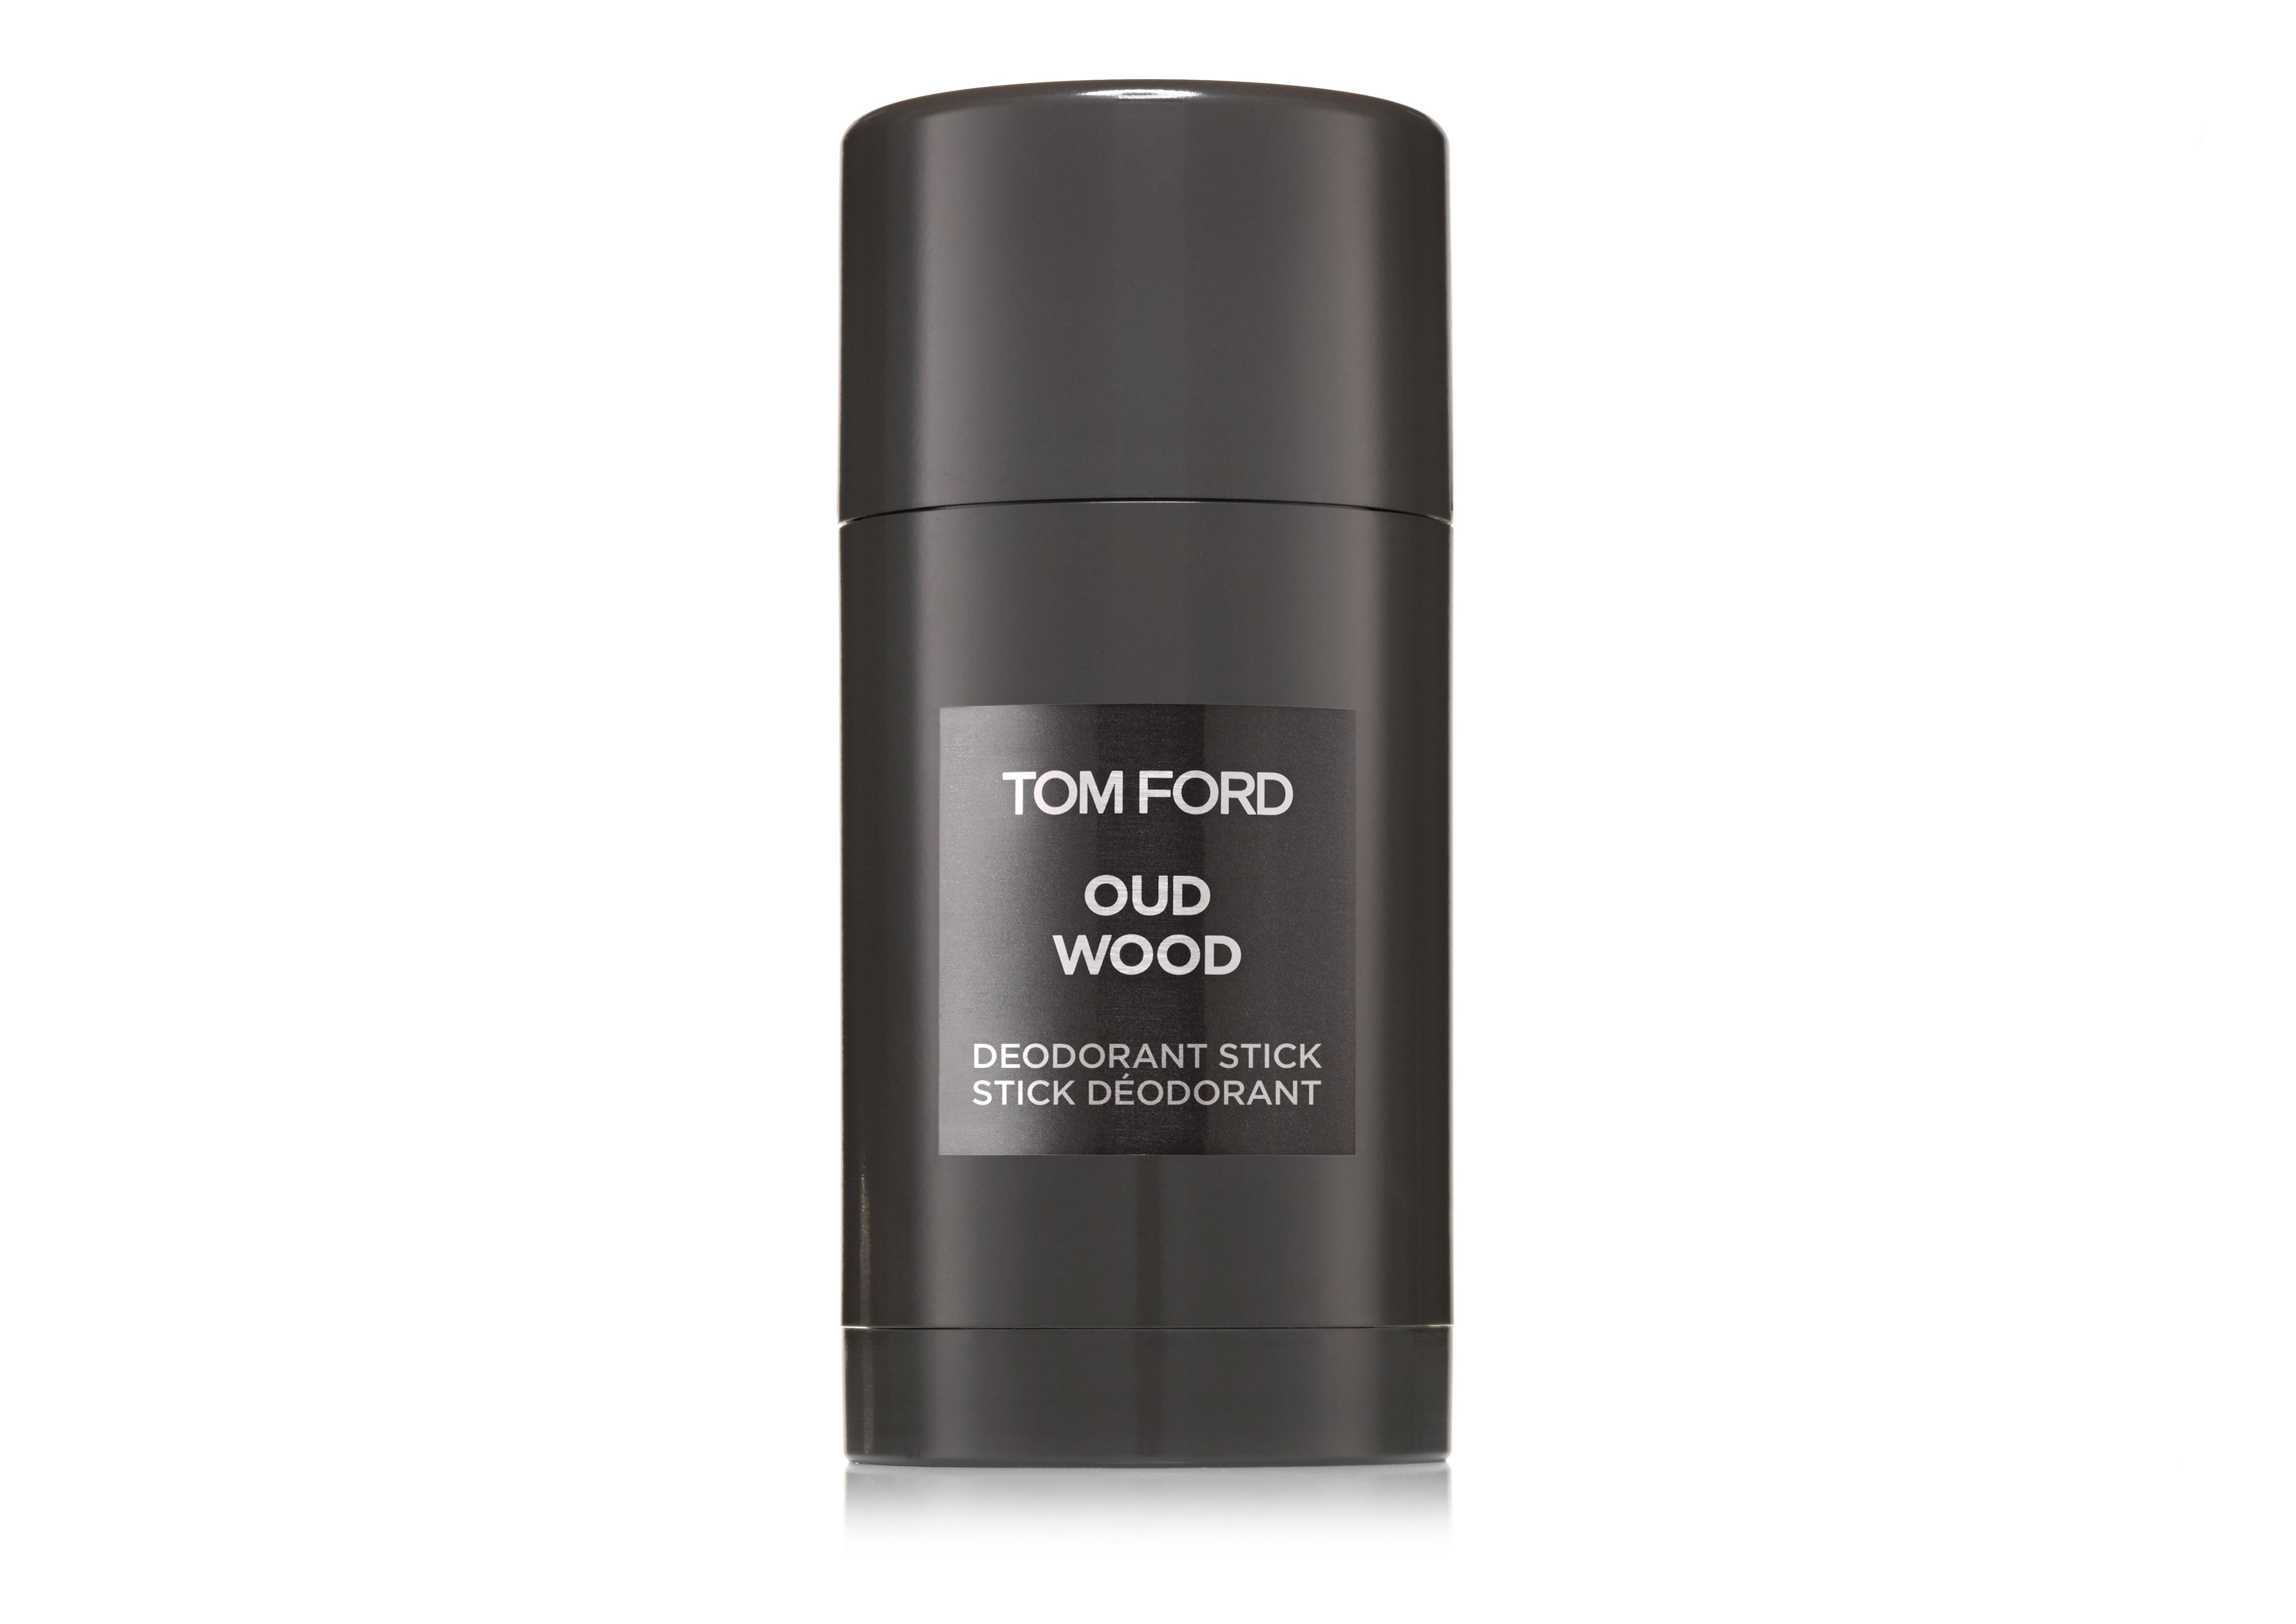 Tom Ford OUD WOOD DEODORANT STICK - Beauty 